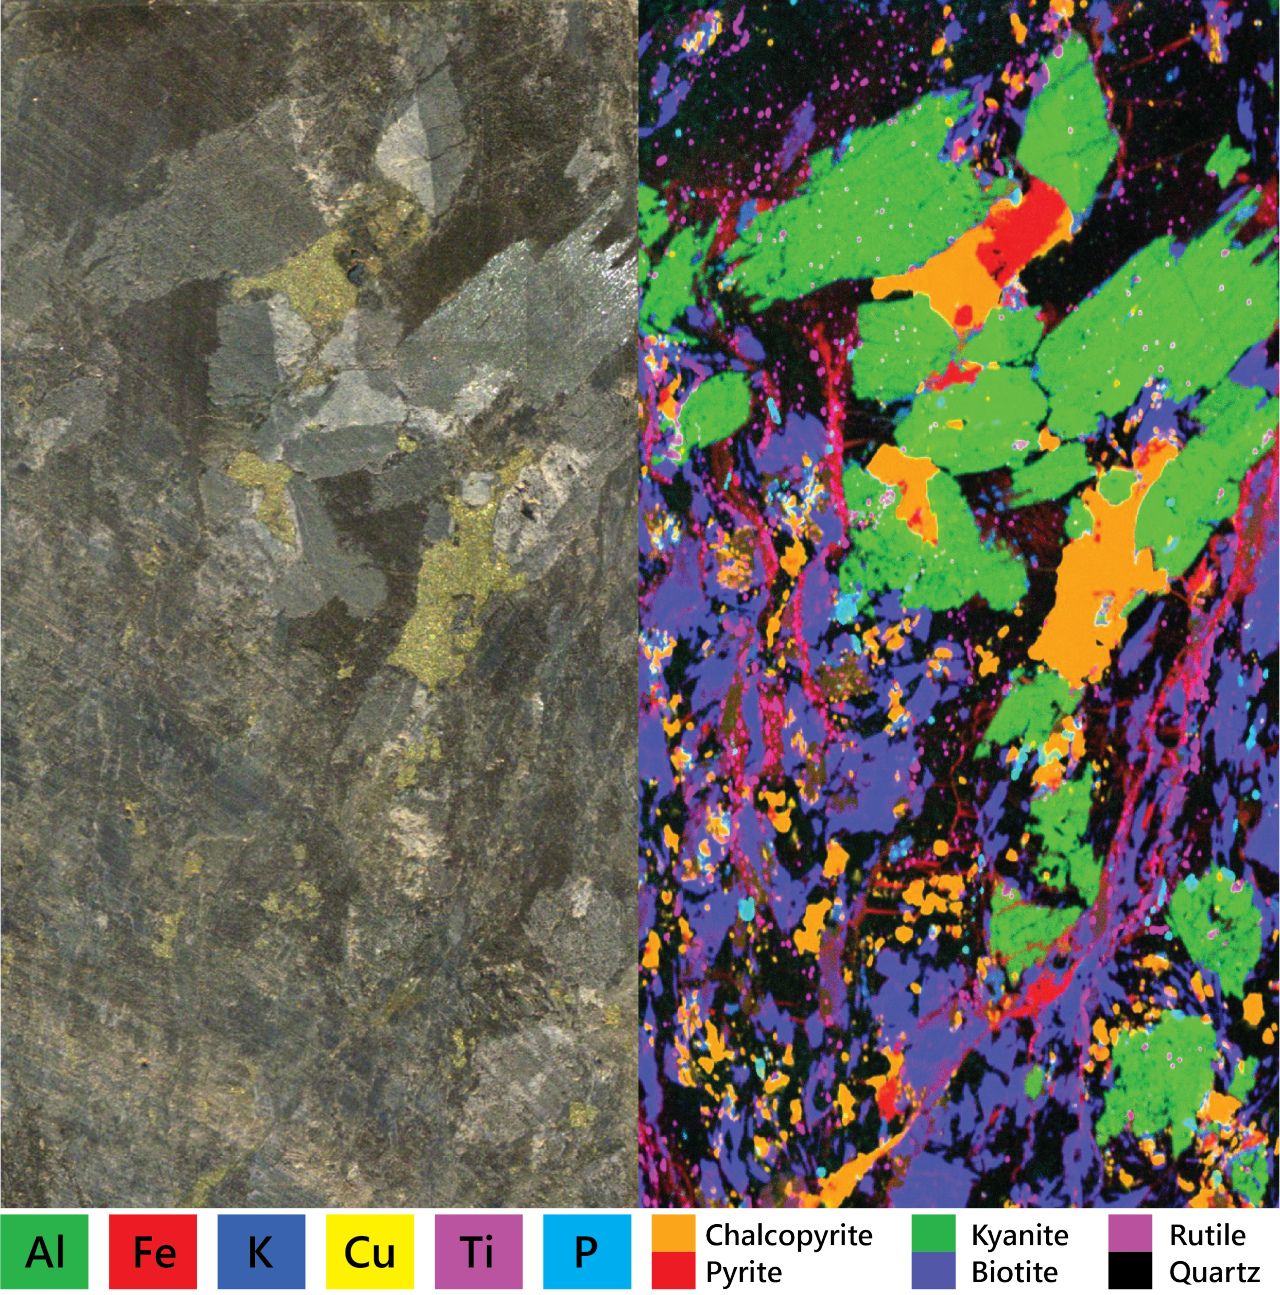 M4 TORNADO elemental map of copper mineralization